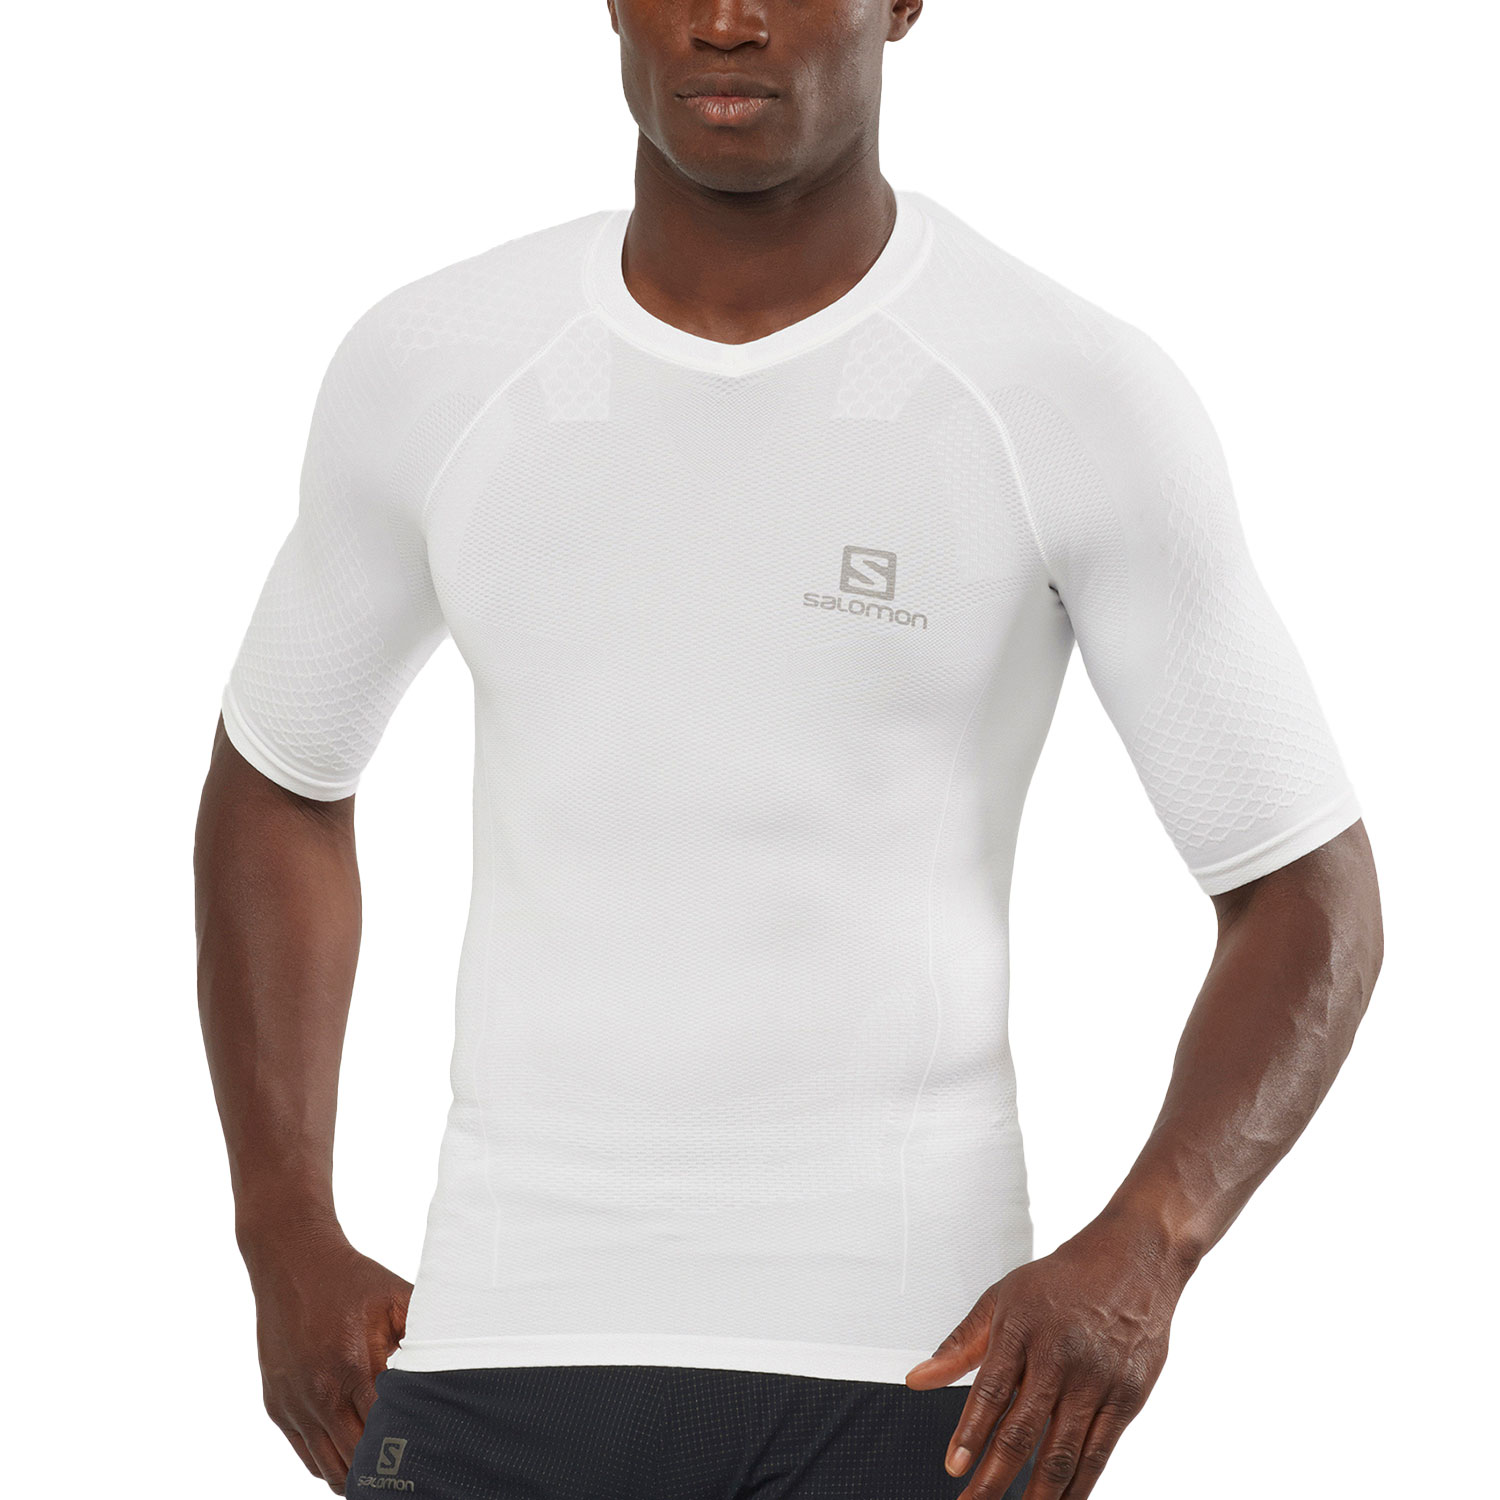 pasta Alleviate Chairman Salomon Exo Motion Men's Running T-Shirt - White